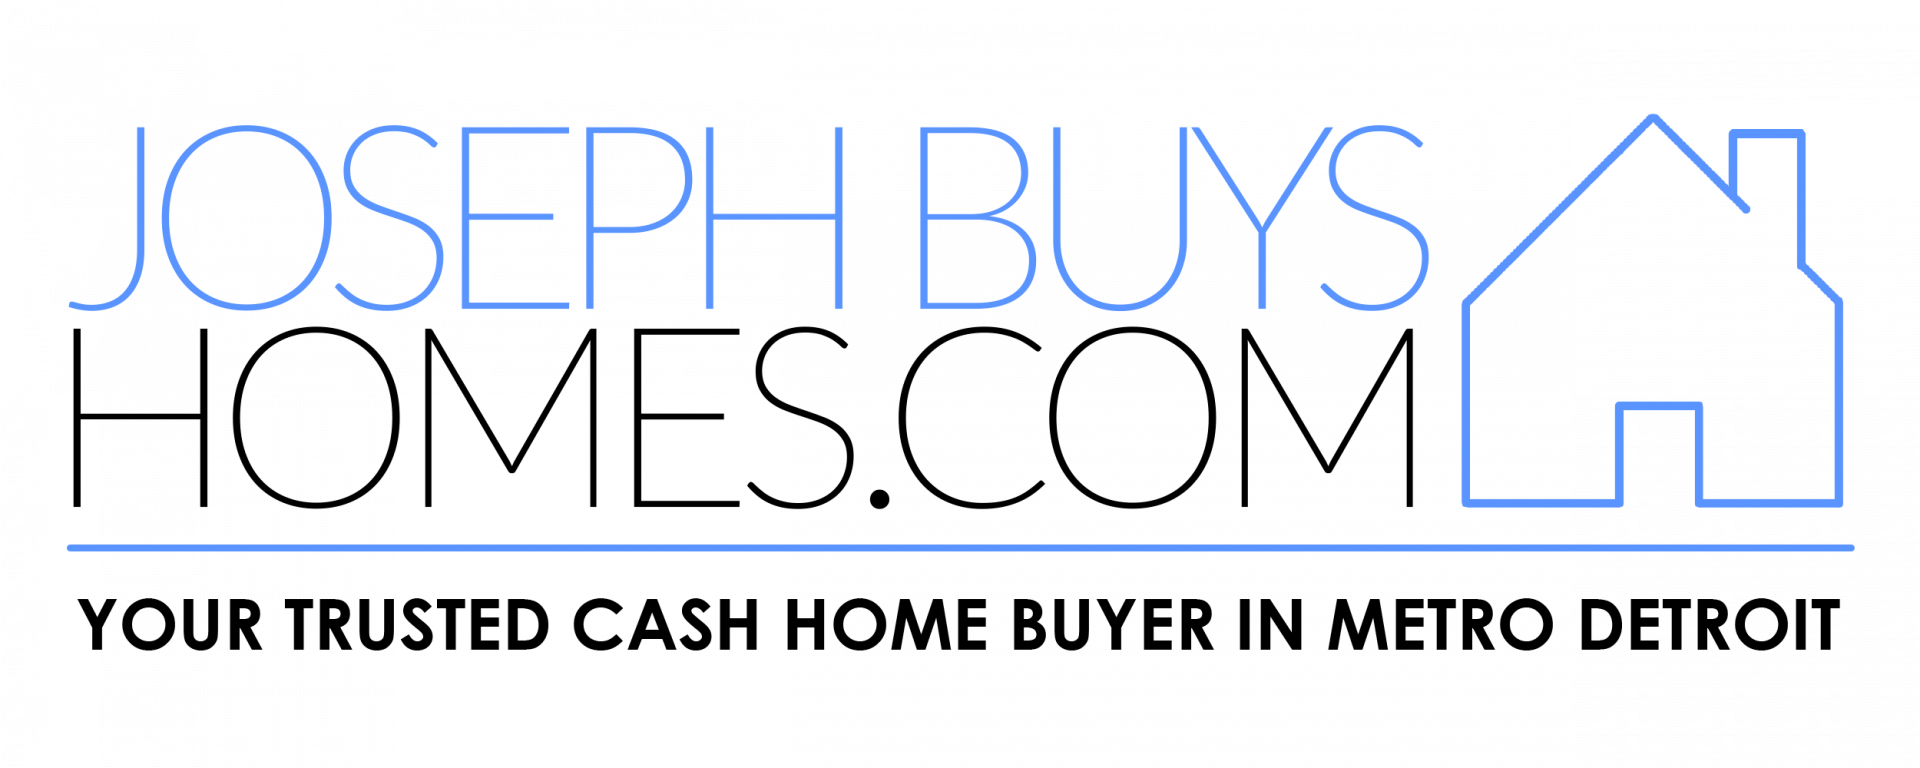 Joseph Buys Homes logo